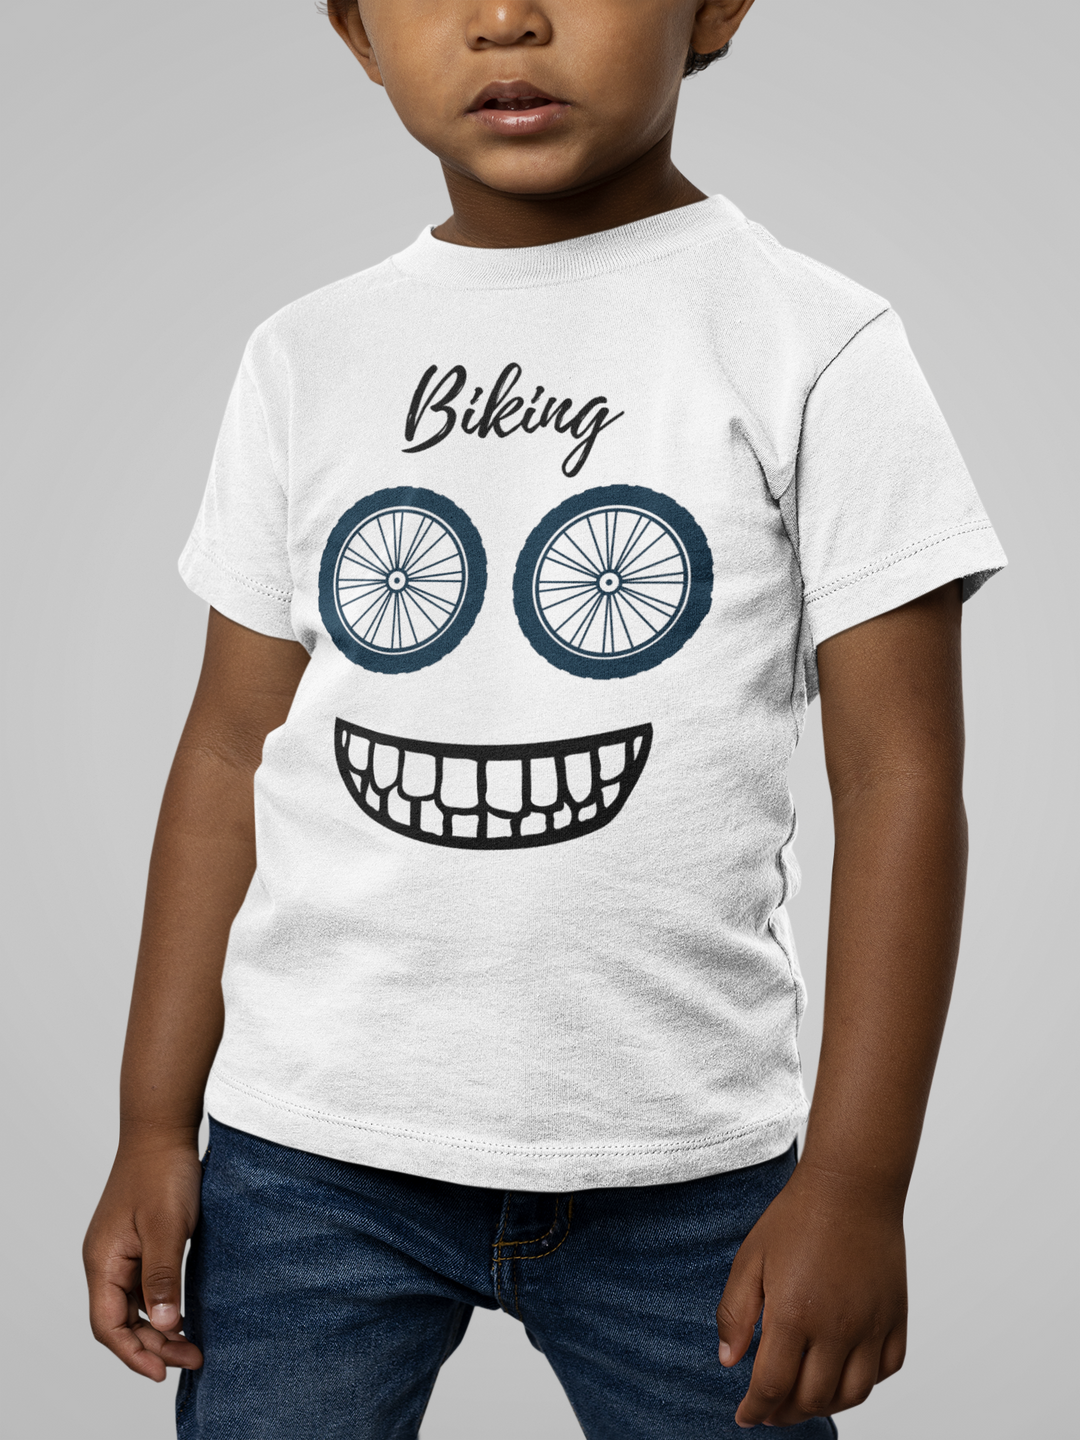 Biking. T-shirts for toddlers and kids up for a biking adventure. - TeesForToddlersandKids -  t-shirt - biking - biking-short-sleeve-t-shirt-for-toddler-and-kids-the-biking-series